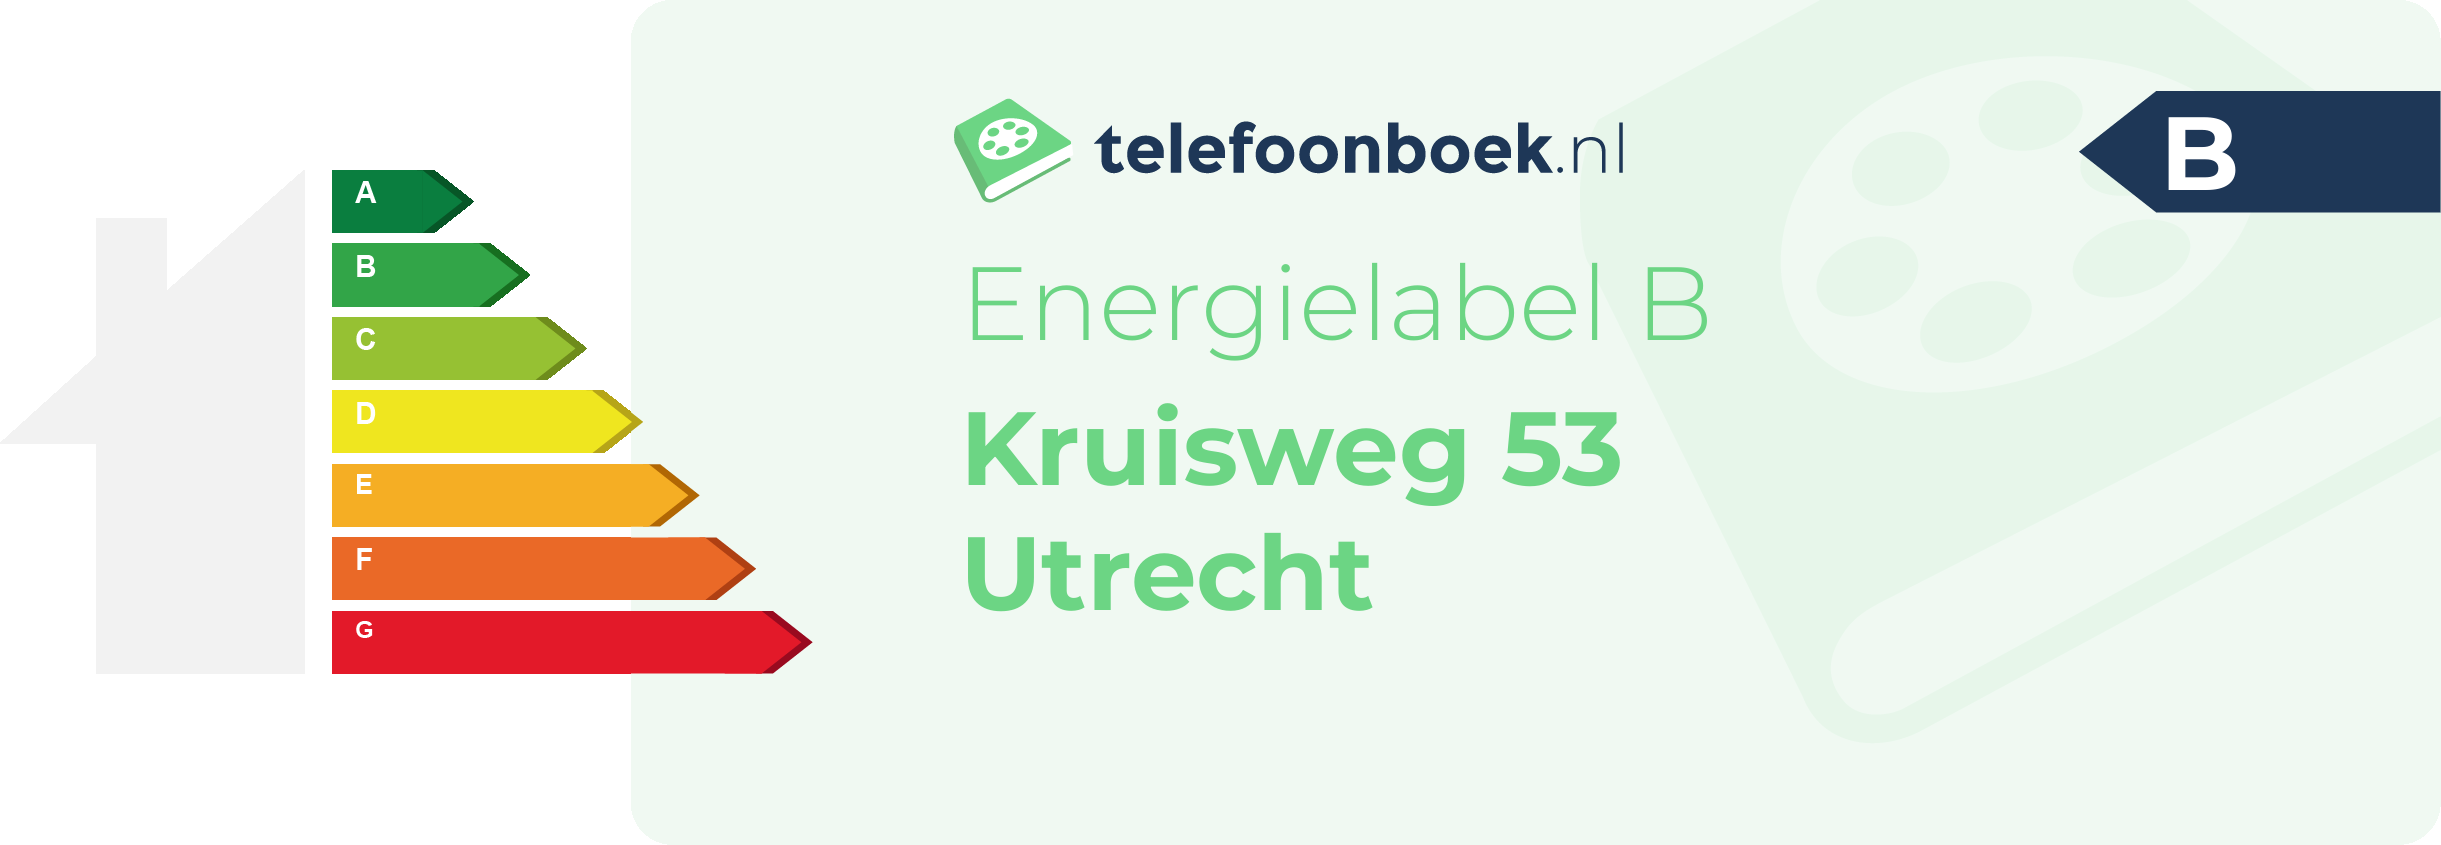 Energielabel Kruisweg 53 Utrecht